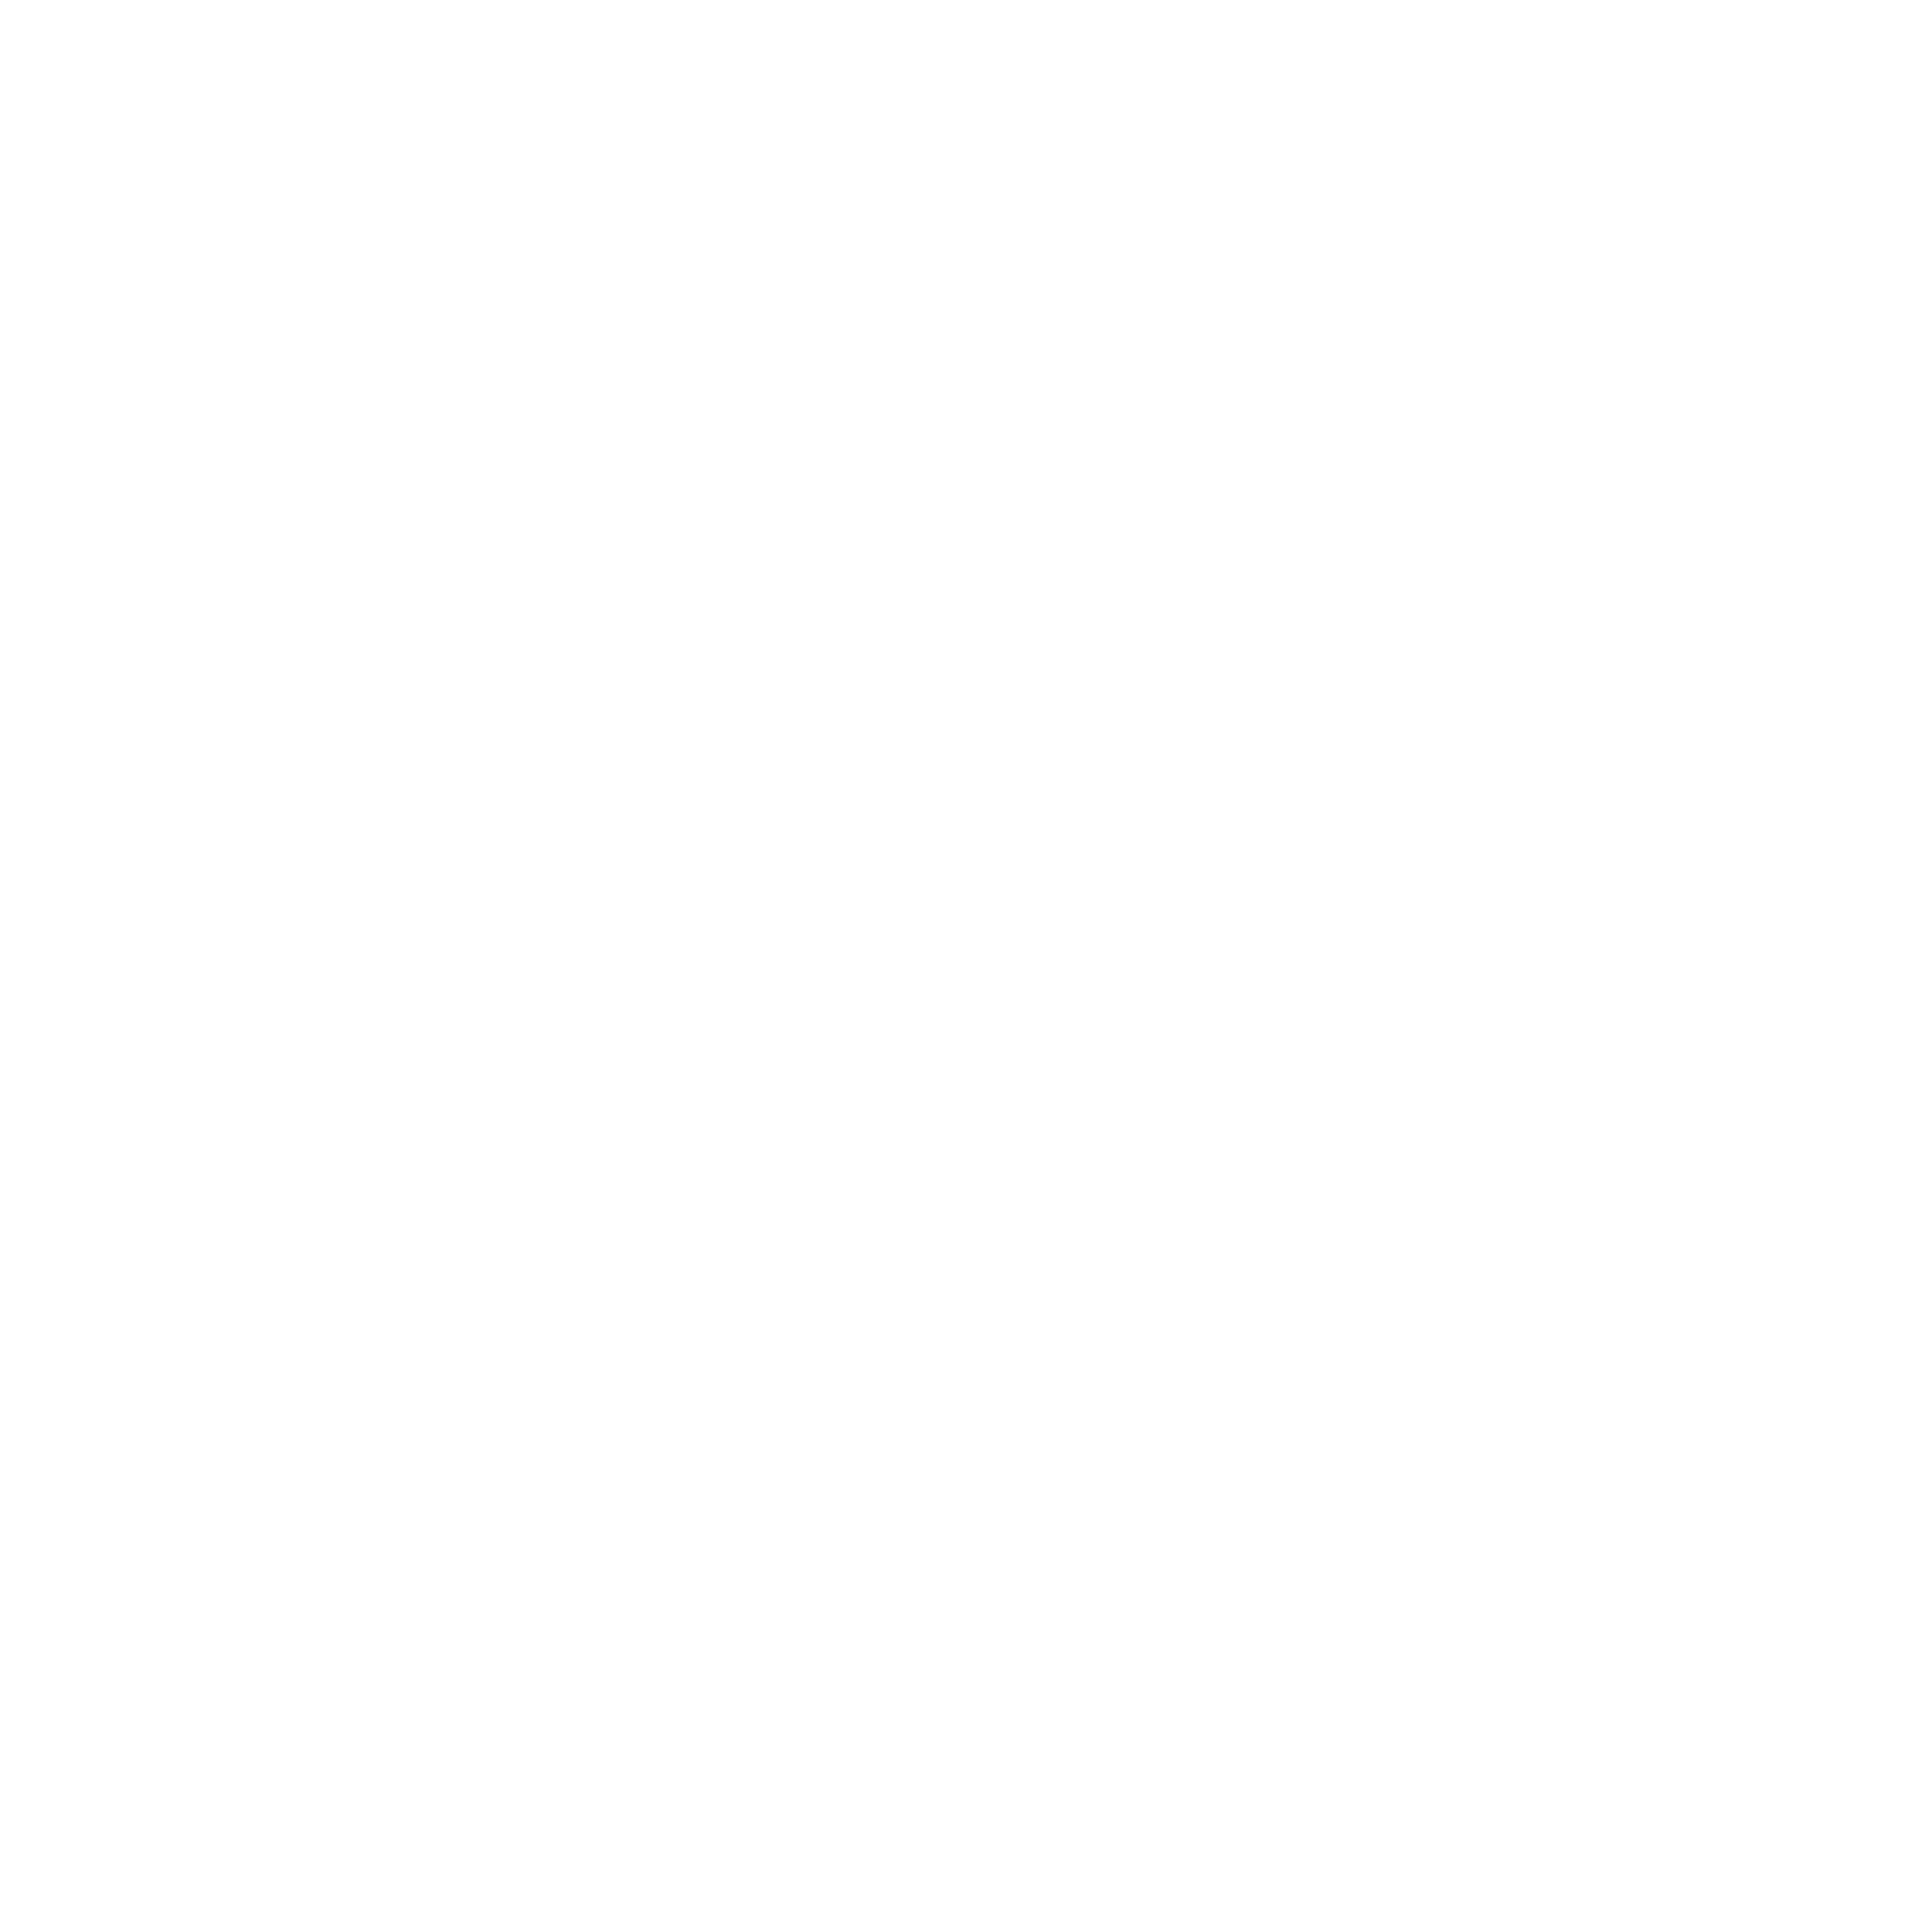 IoT Tribe